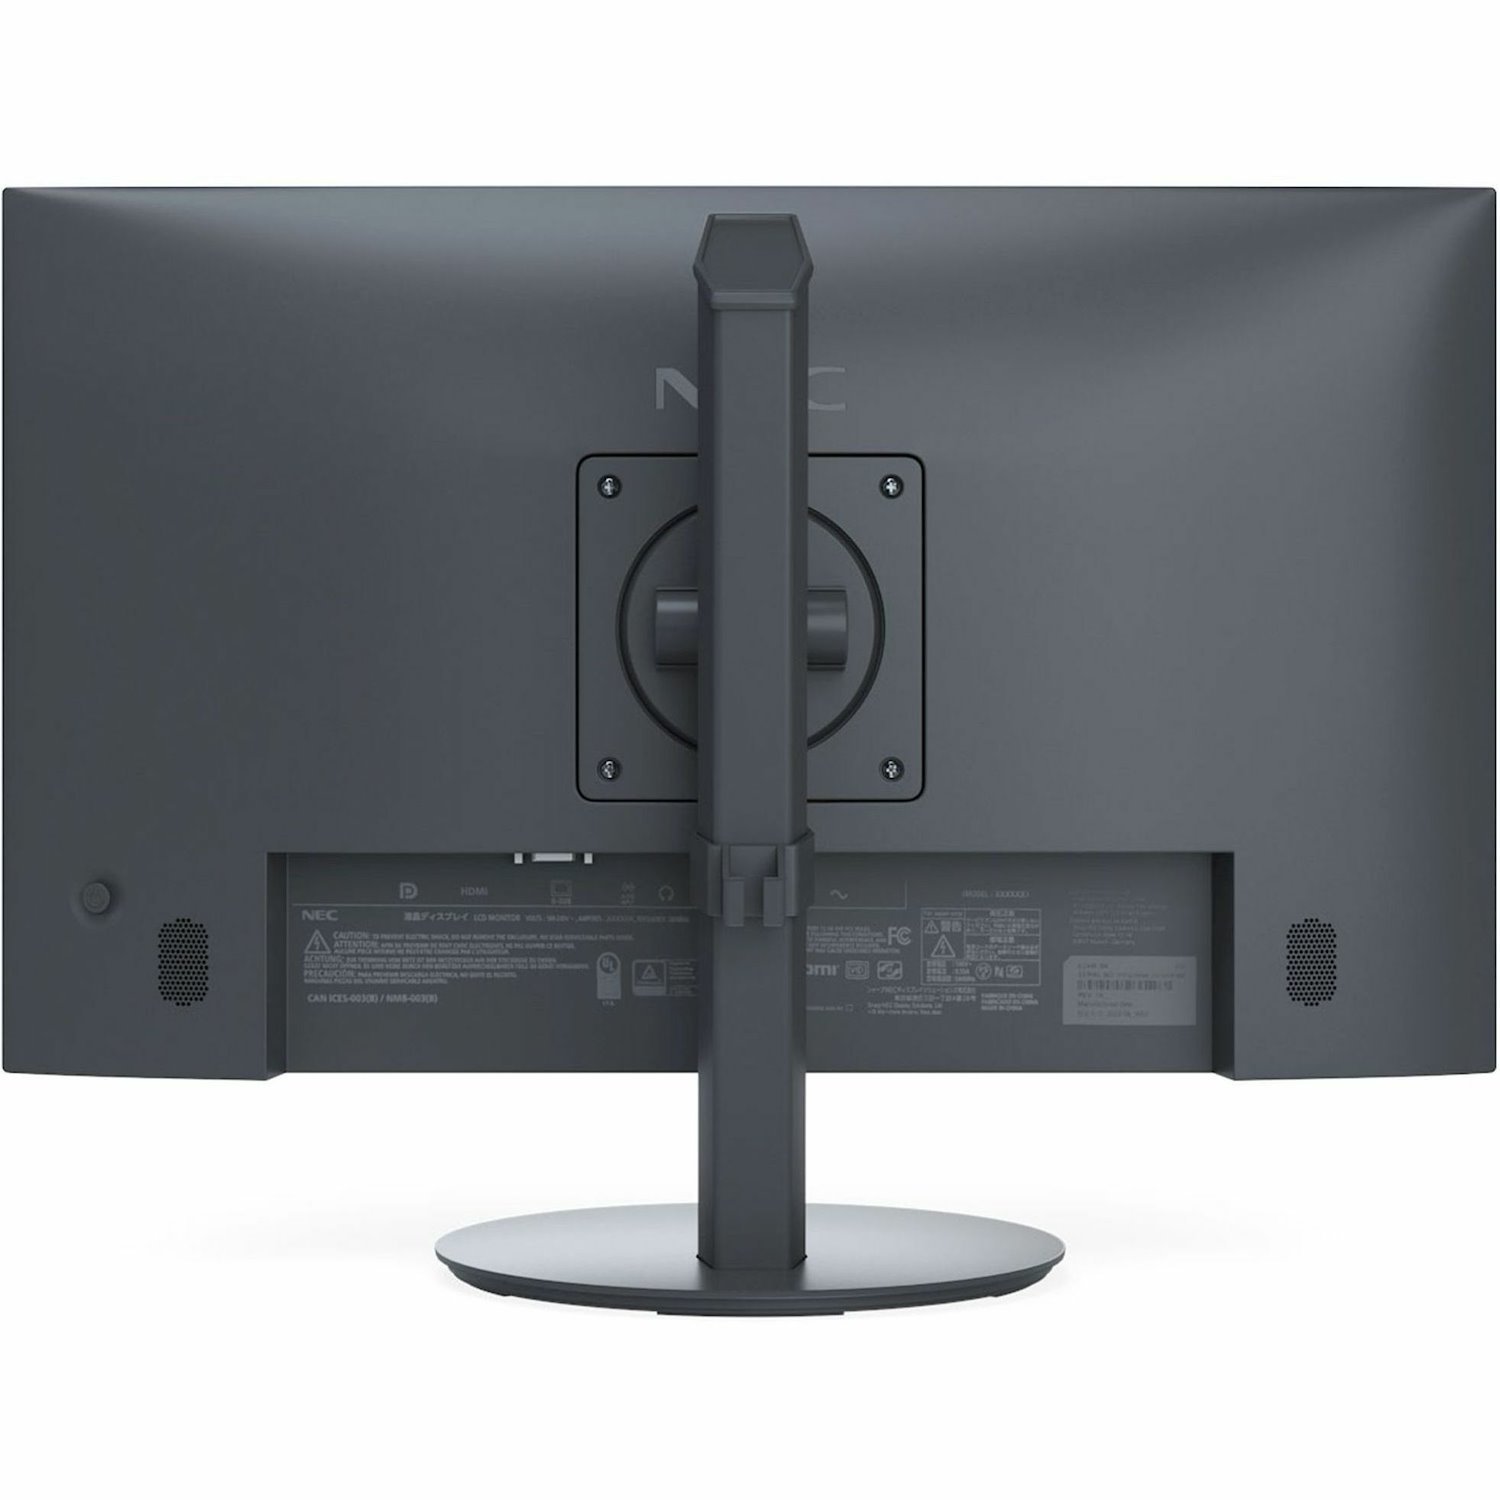 NEC Display MultiSync E224F-BK 22" Class Full HD LED Monitor - 16:9 - Black, White